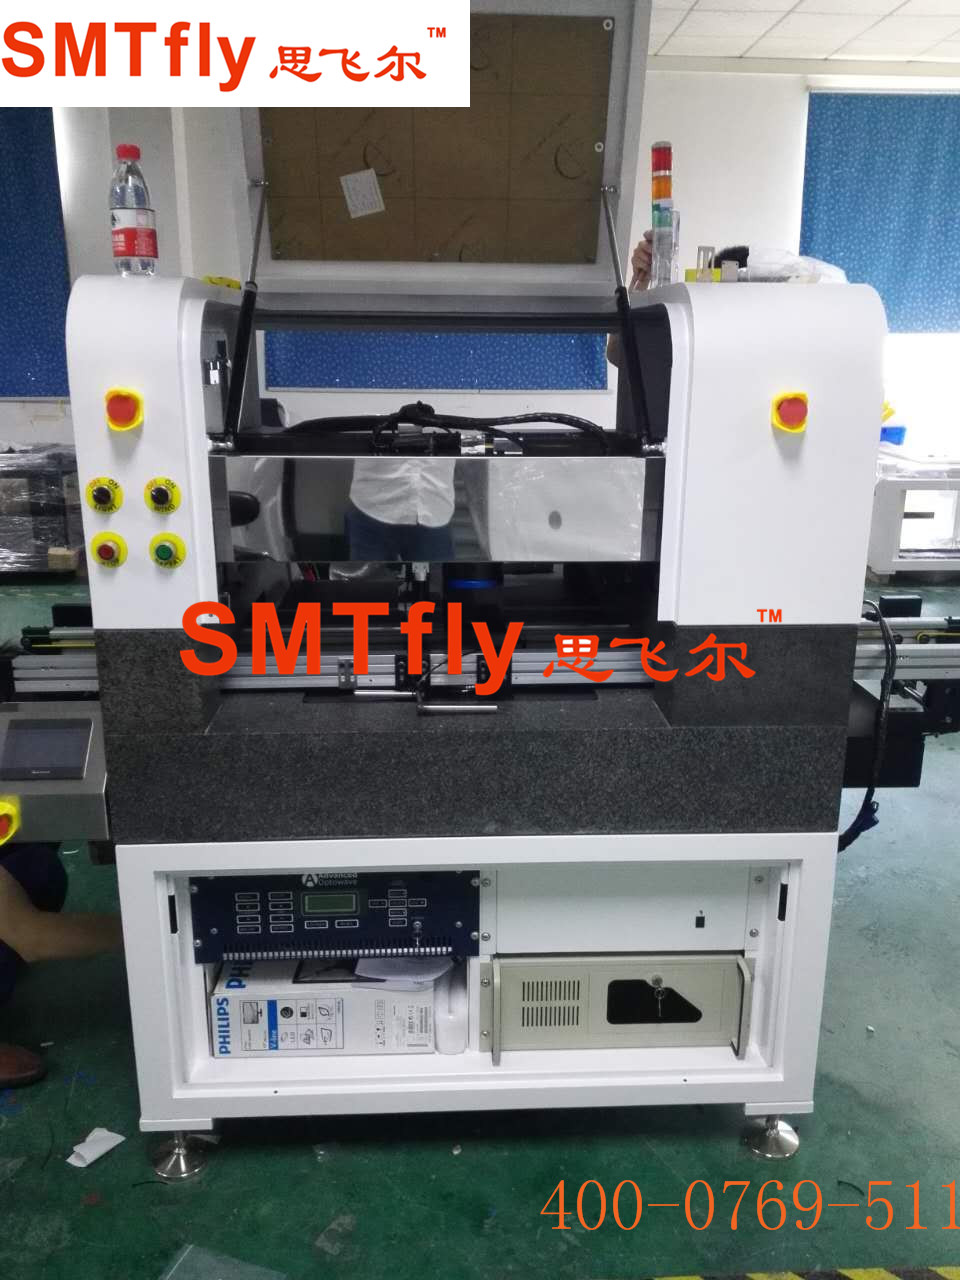 PCB Laser Depaneling, SMTfly-5LI